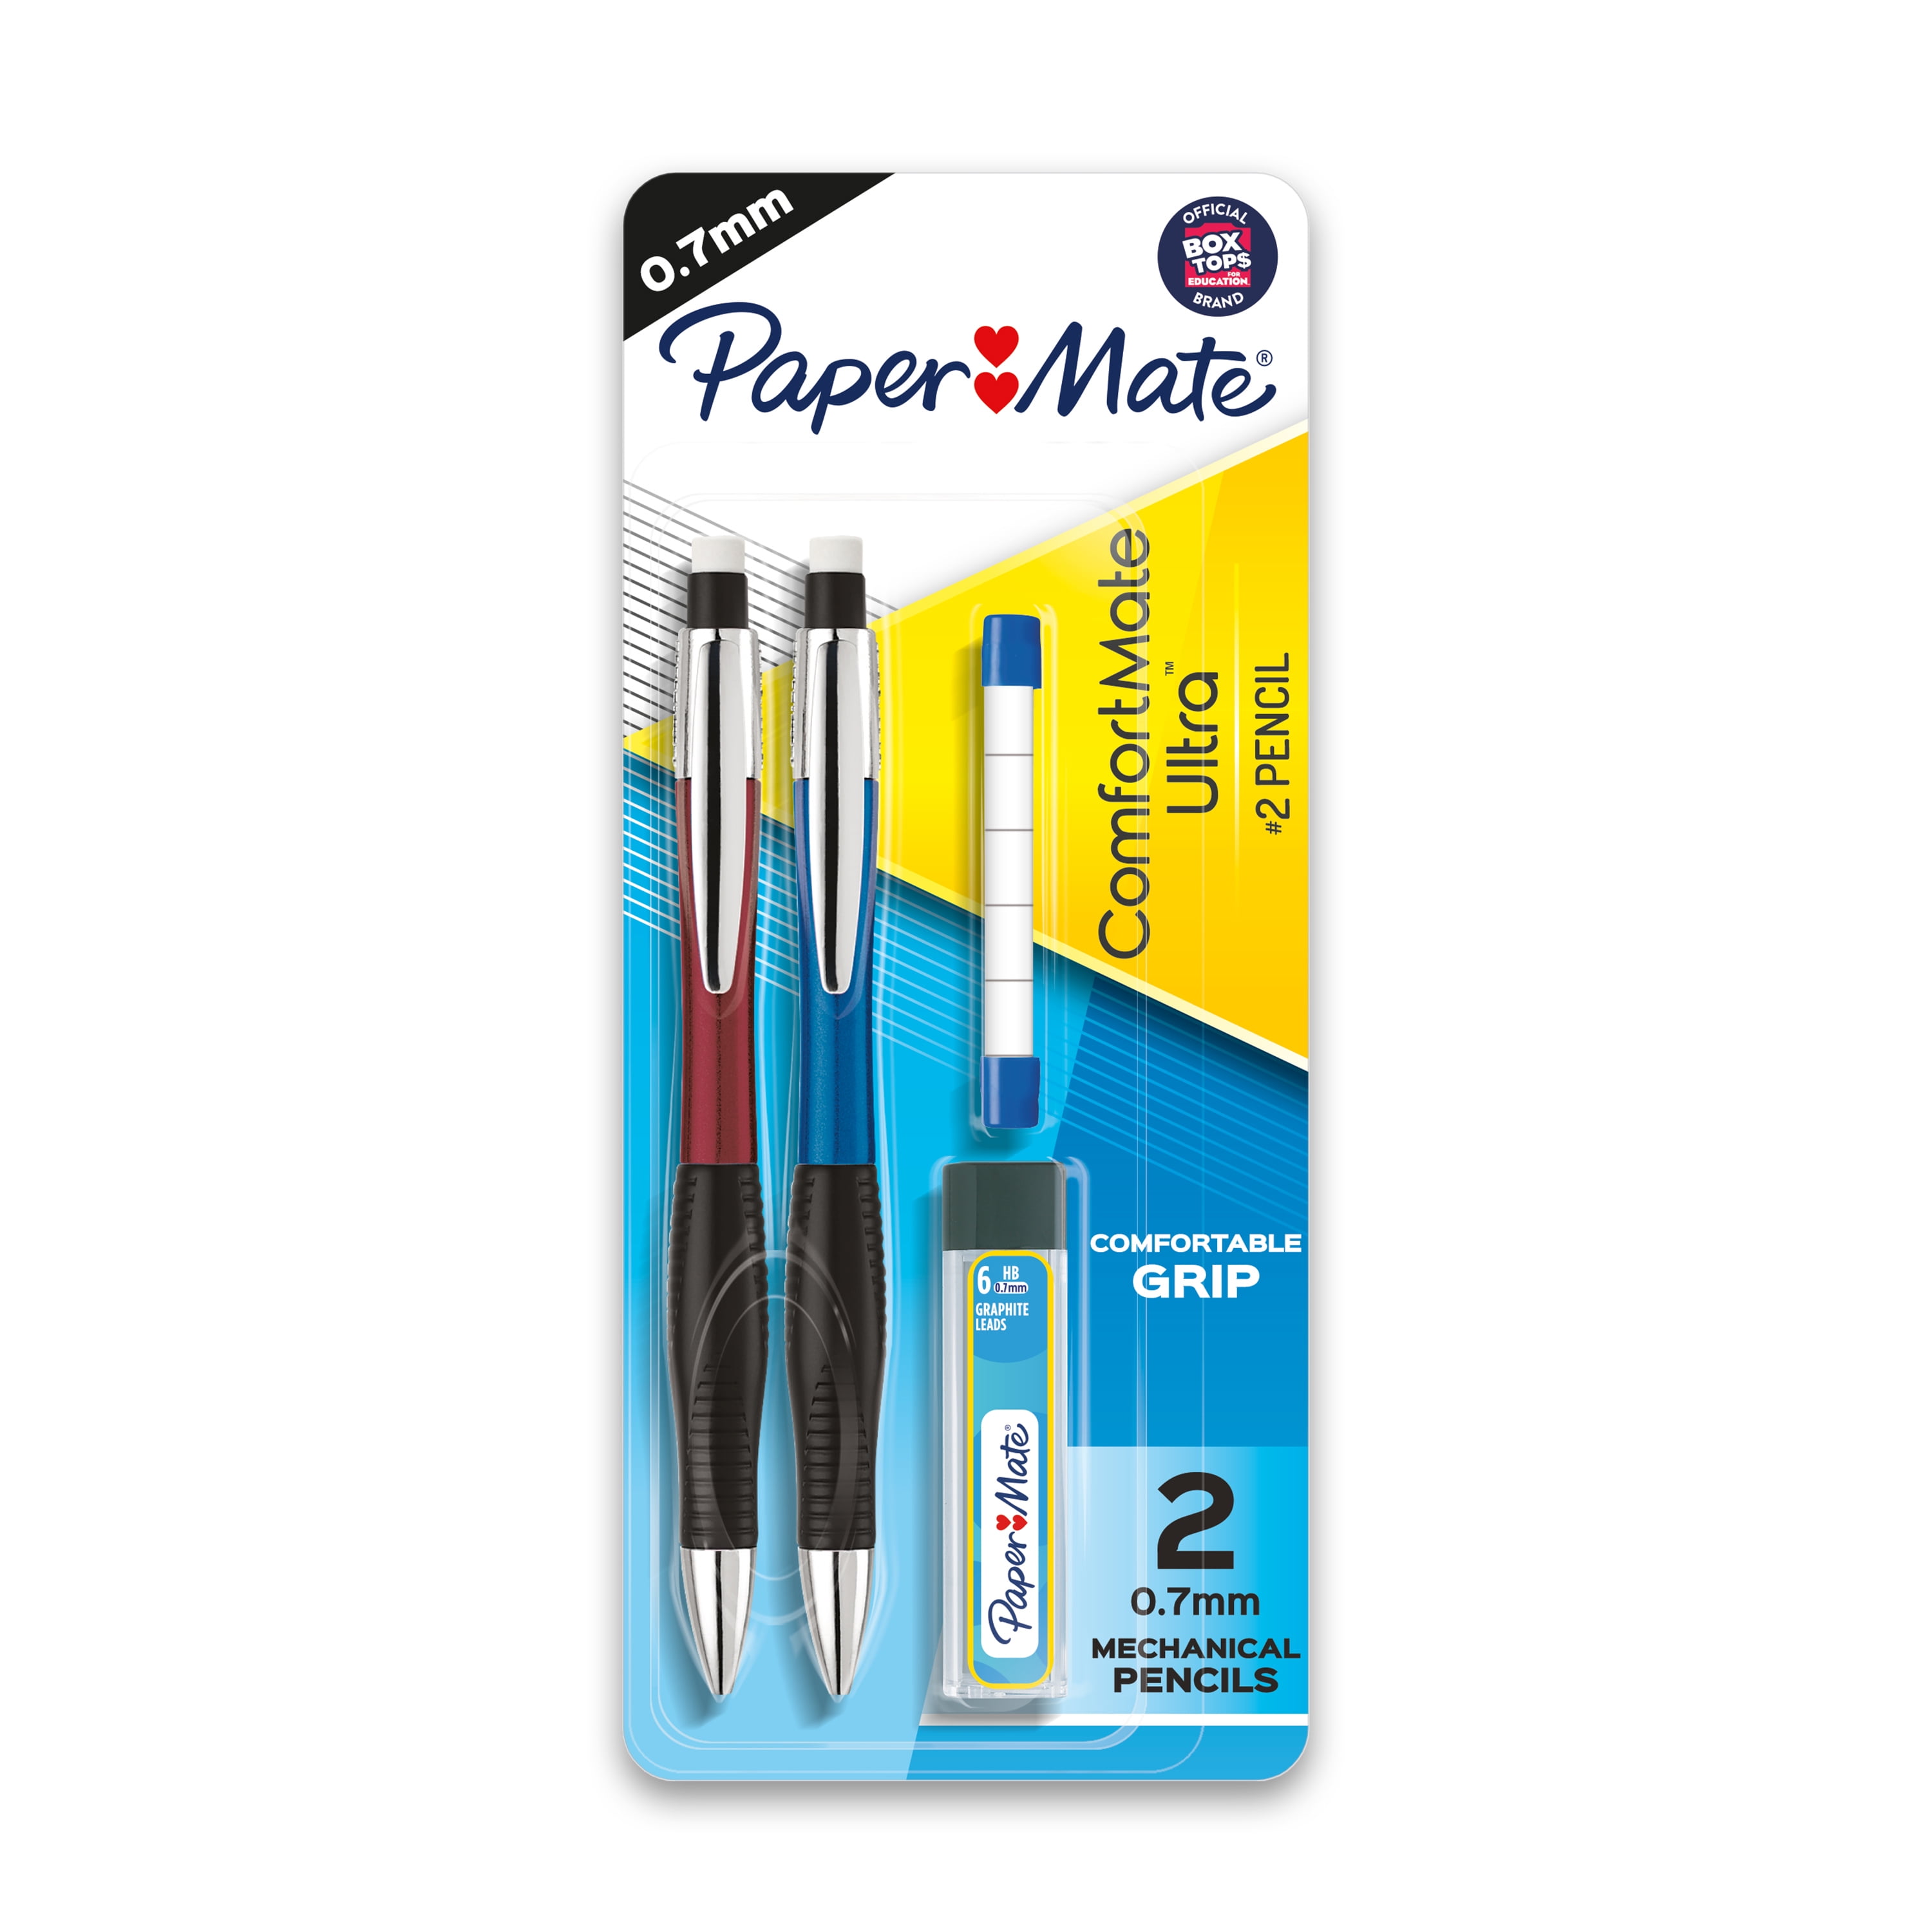 COLNK Mechanical Pencil Set, 6pcs 2.0mm Art Mechanical Pencils for Drafting Writing w/ 2 Tubes of Lead Refills,Drawing Pencils for Sketching Pencils